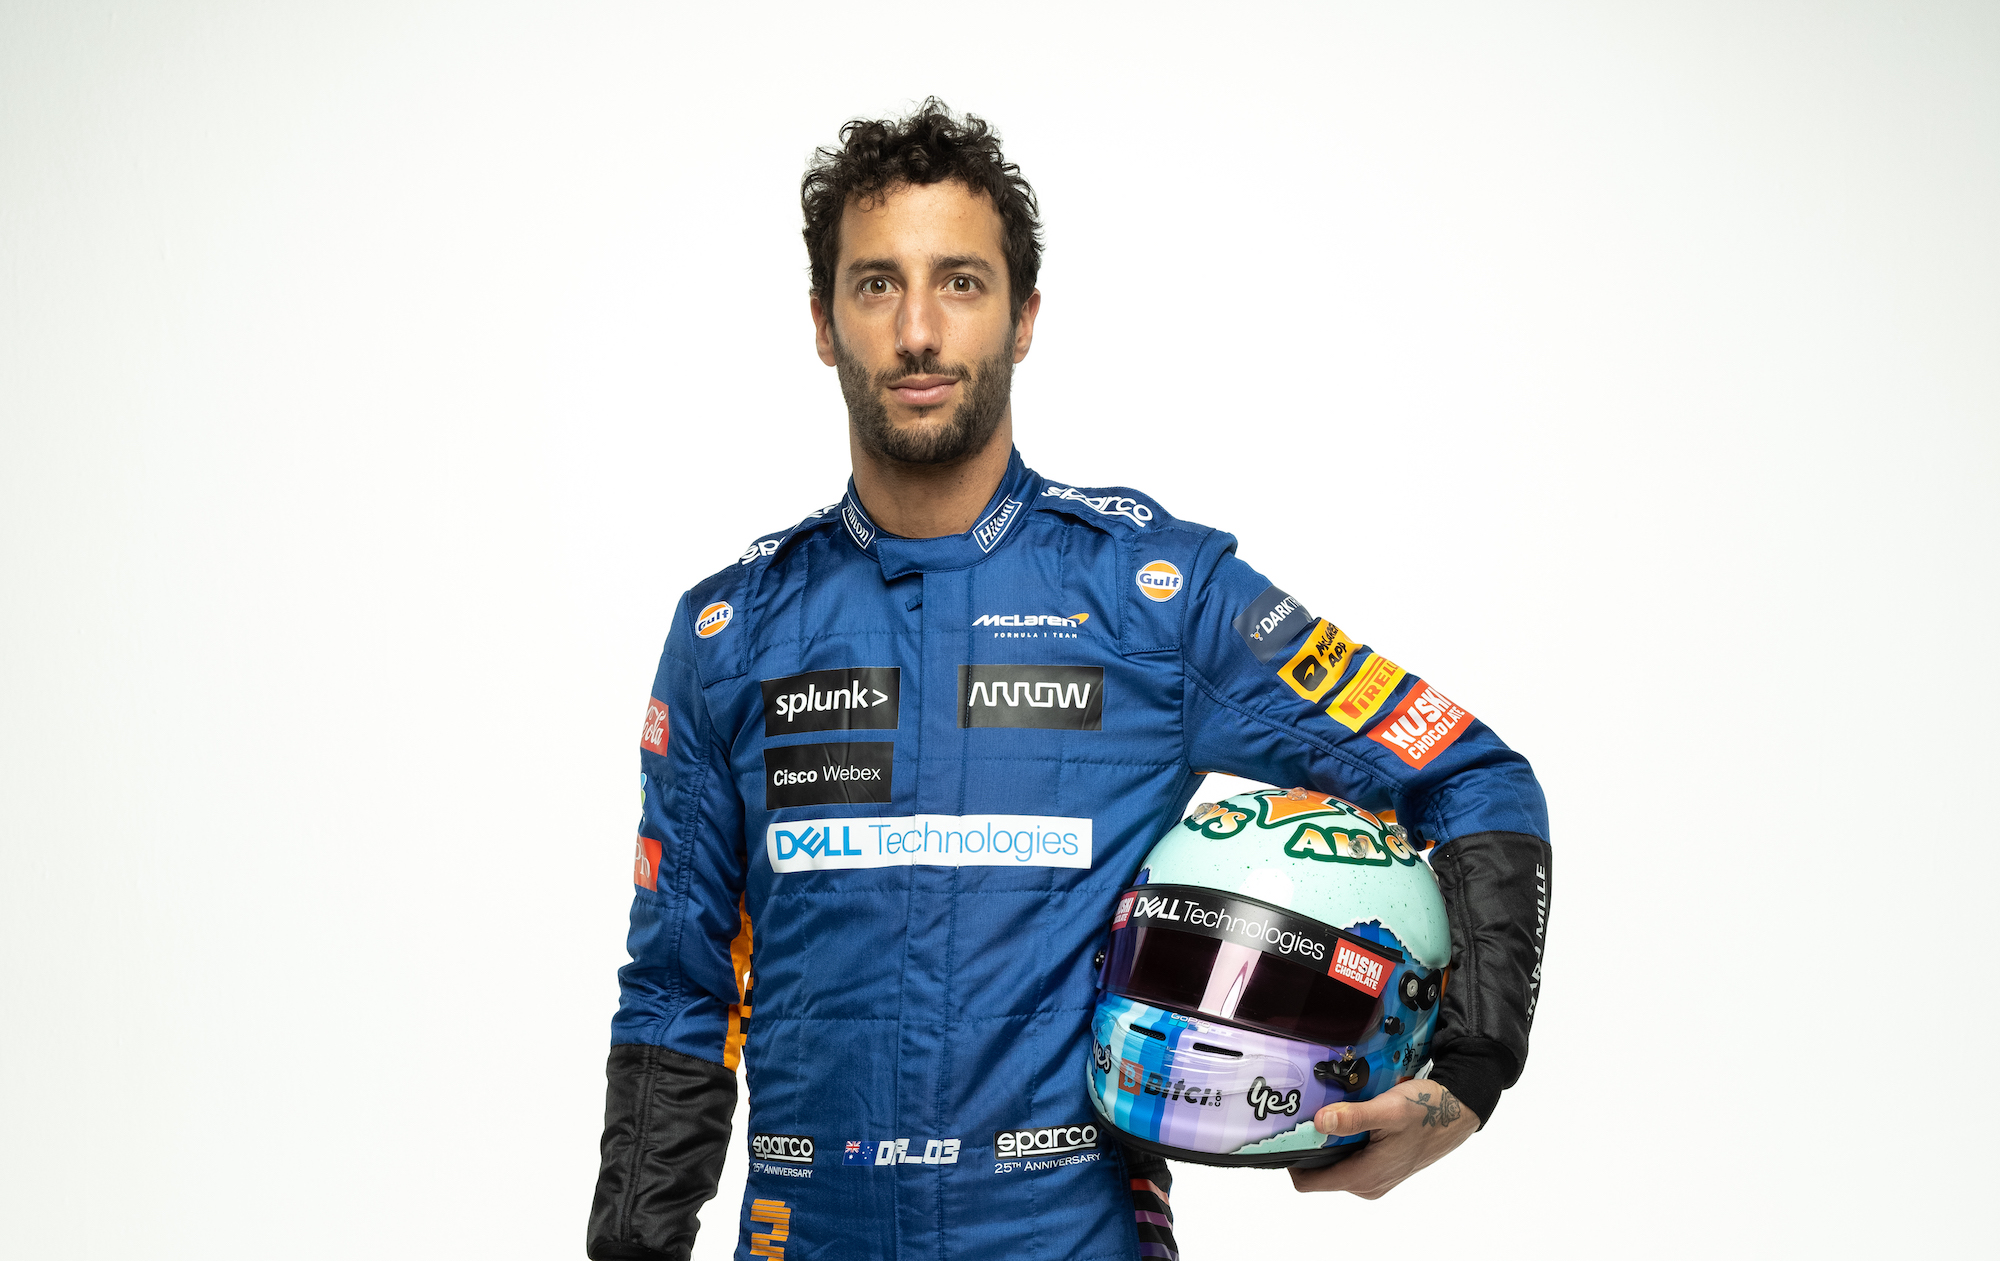 WTF? F1 Star Daniel Ricciardo Among Entrants For B&T’s Best Of The Best ...